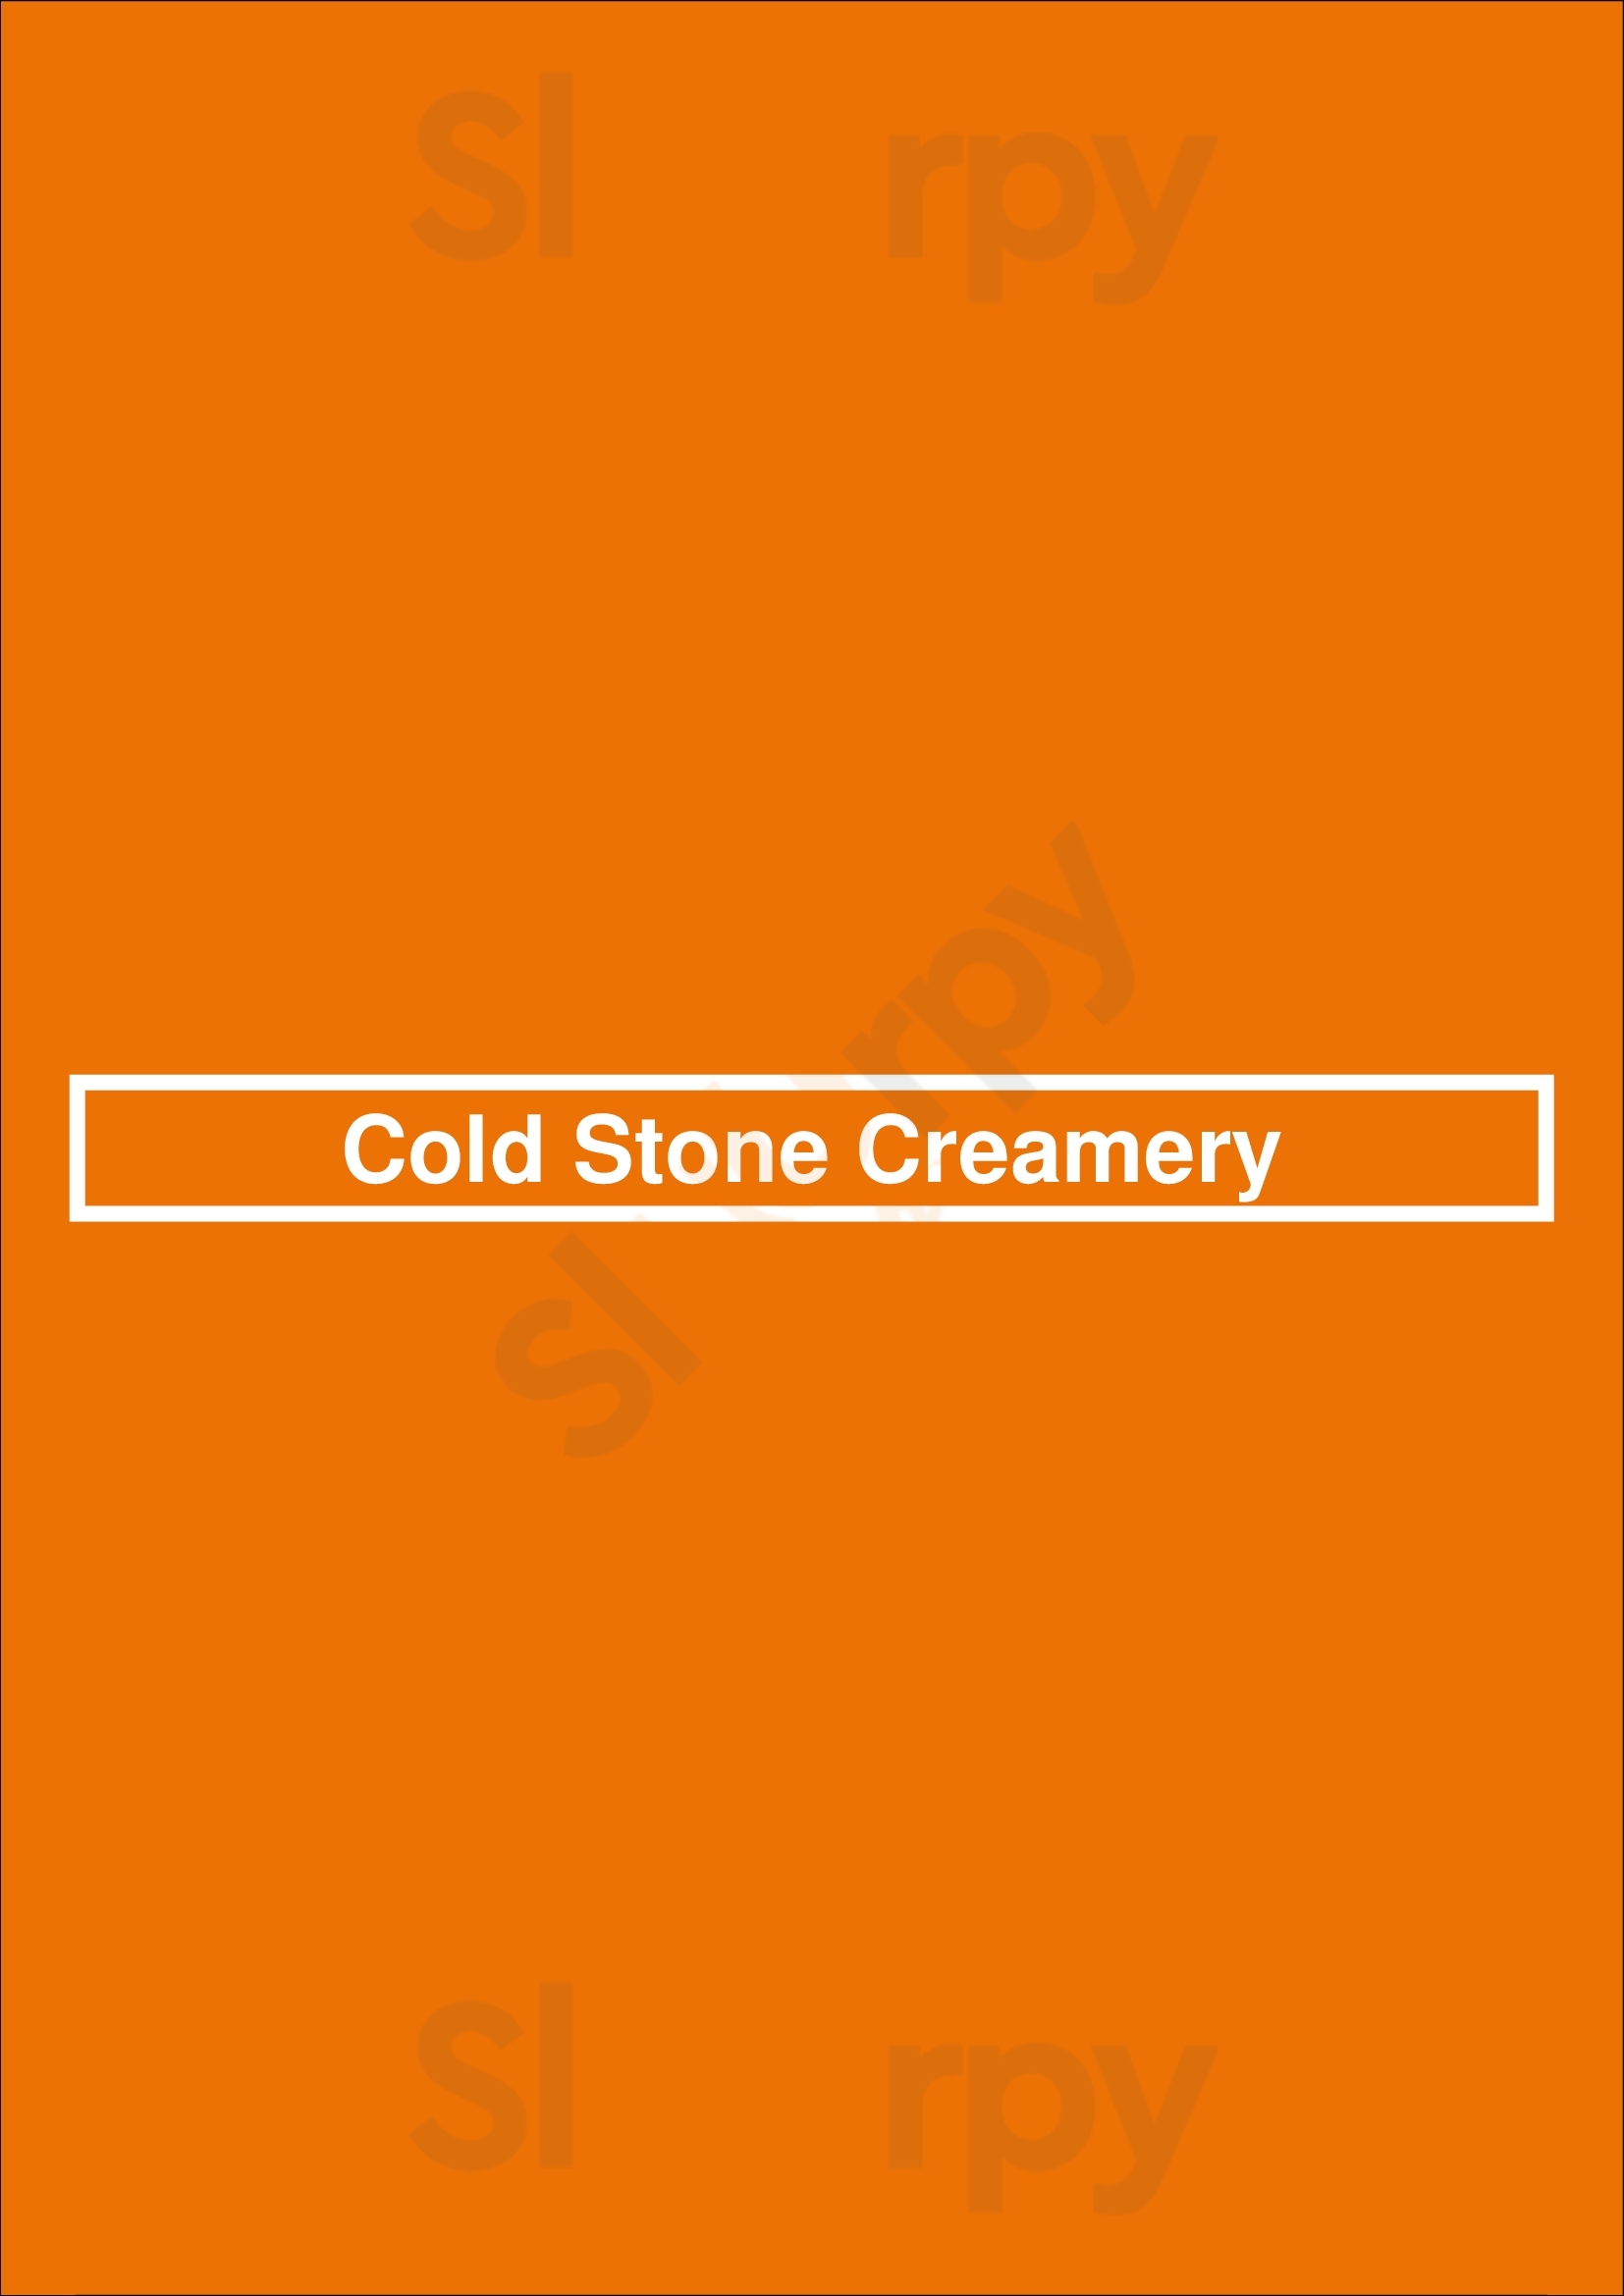 Cold Stone Creamery Maumee Menu - 1